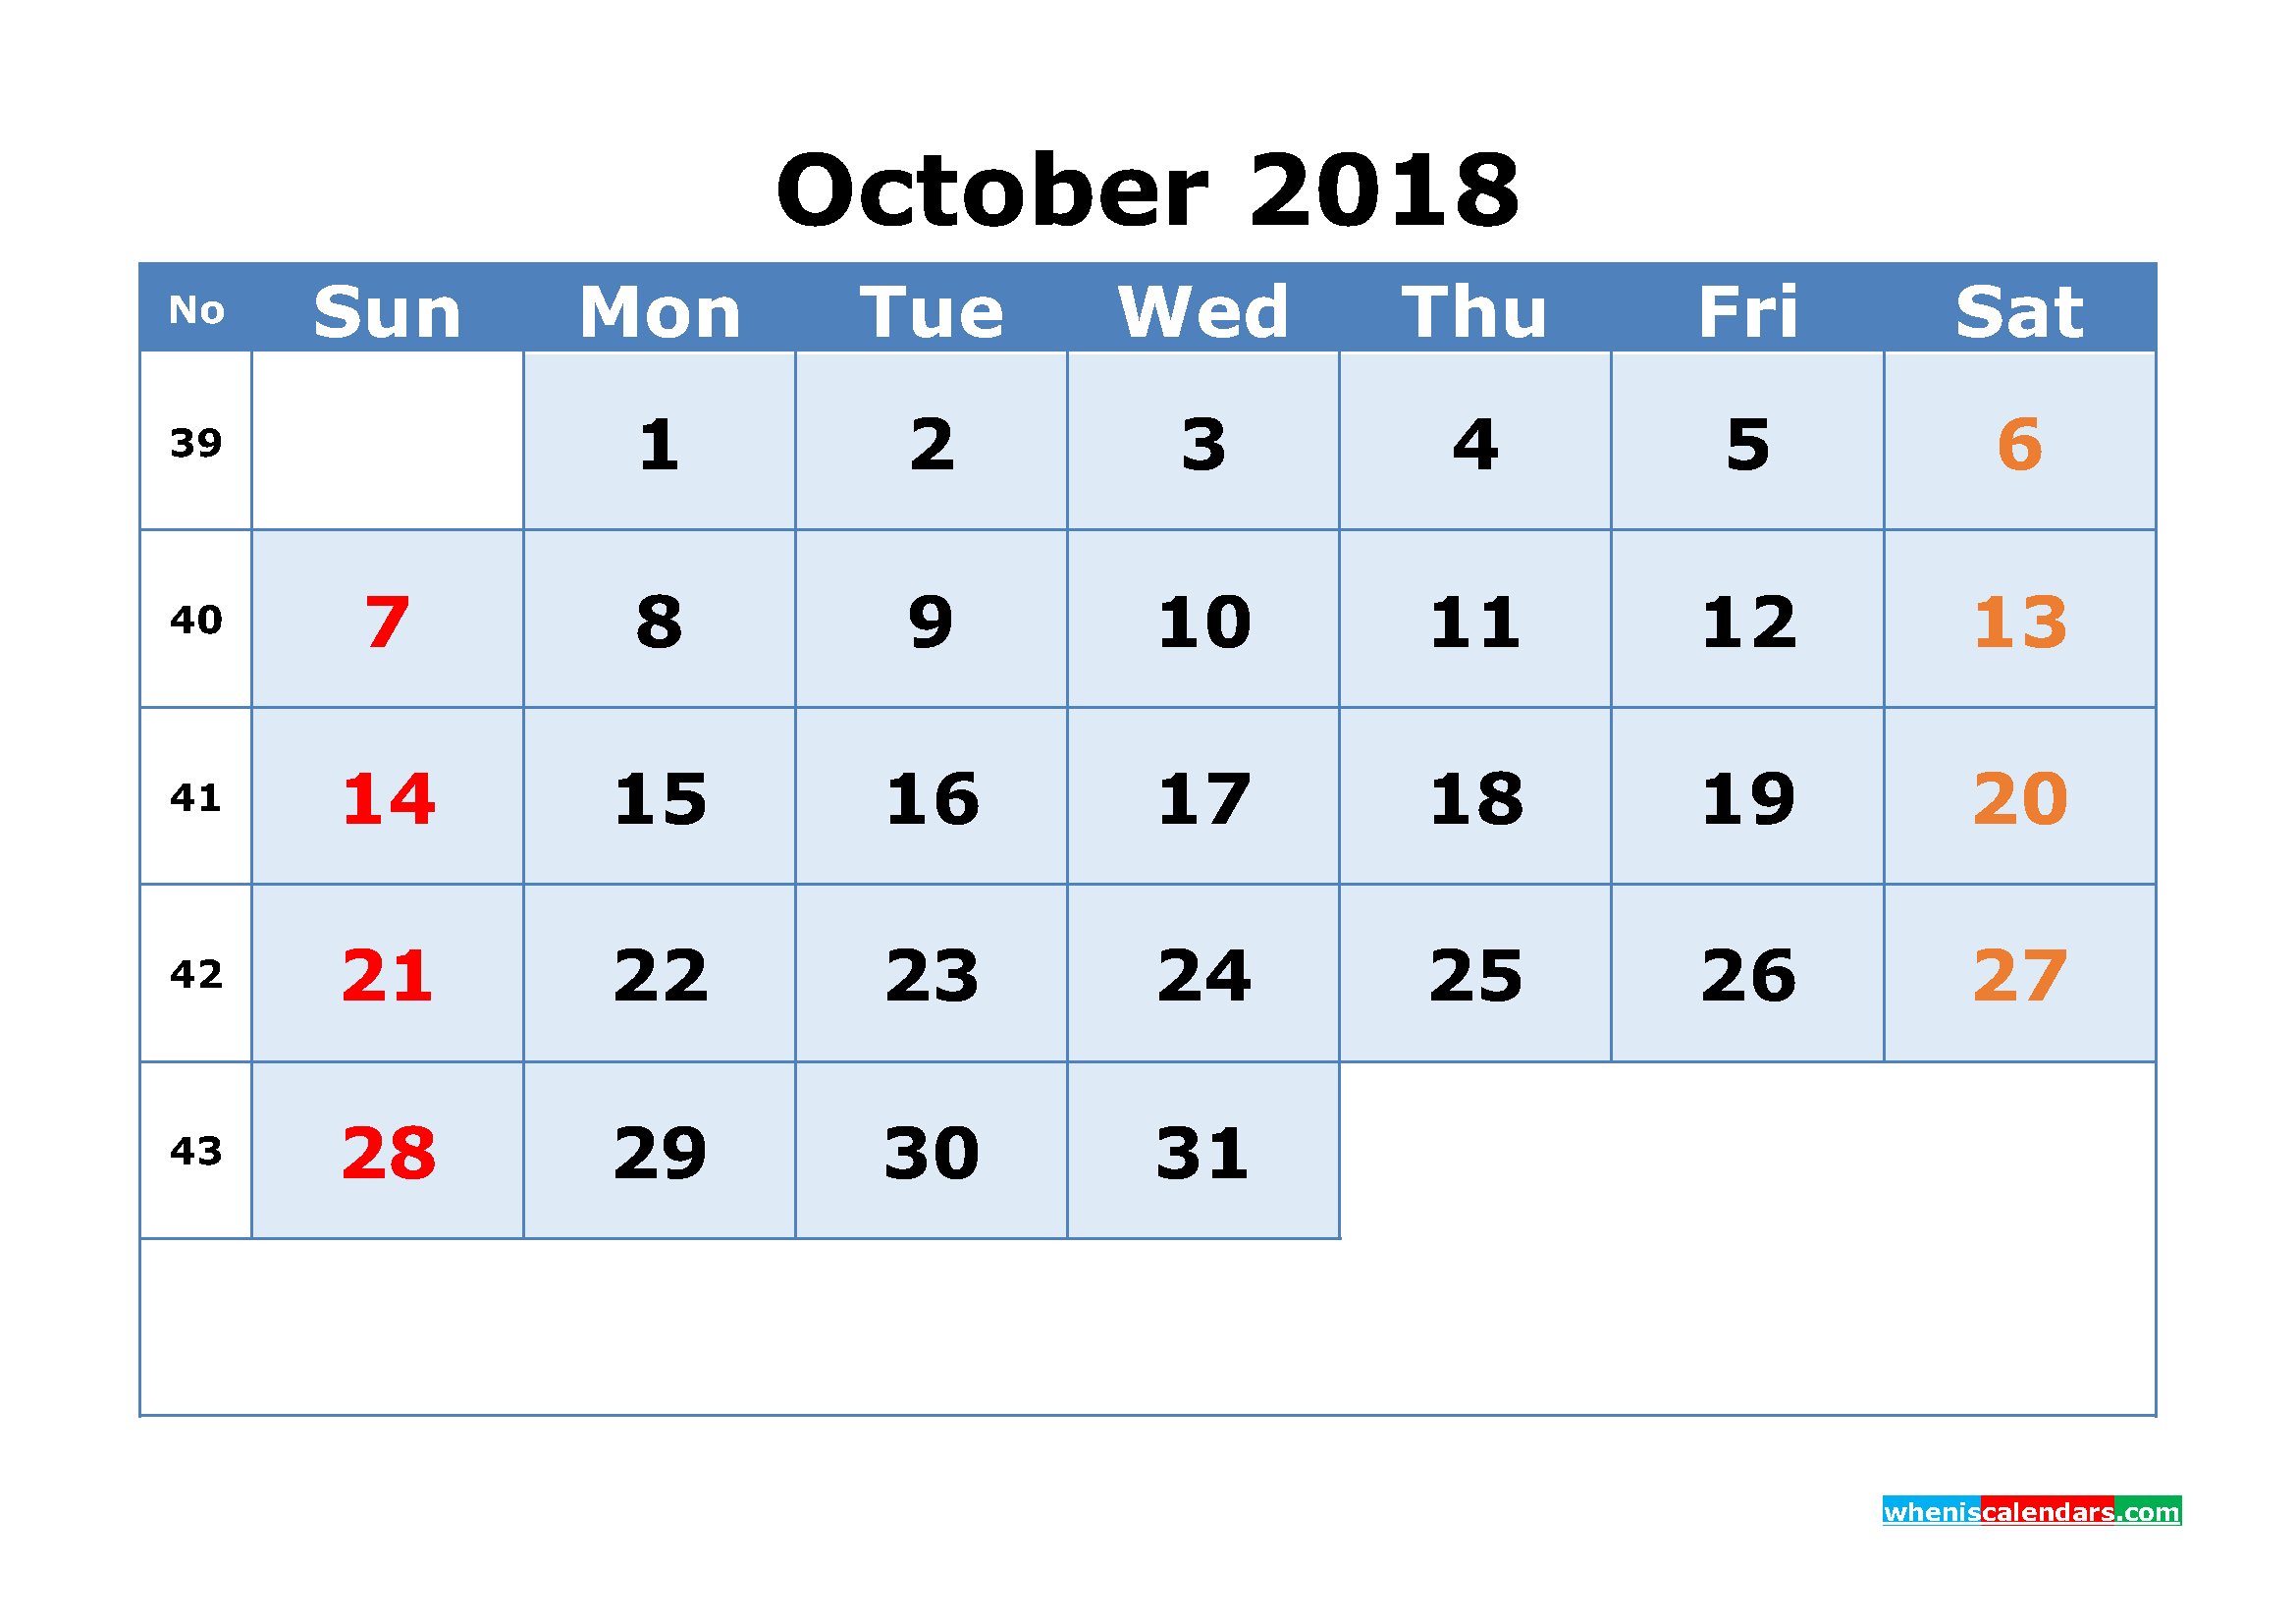 october-2018-calendar-wikidates